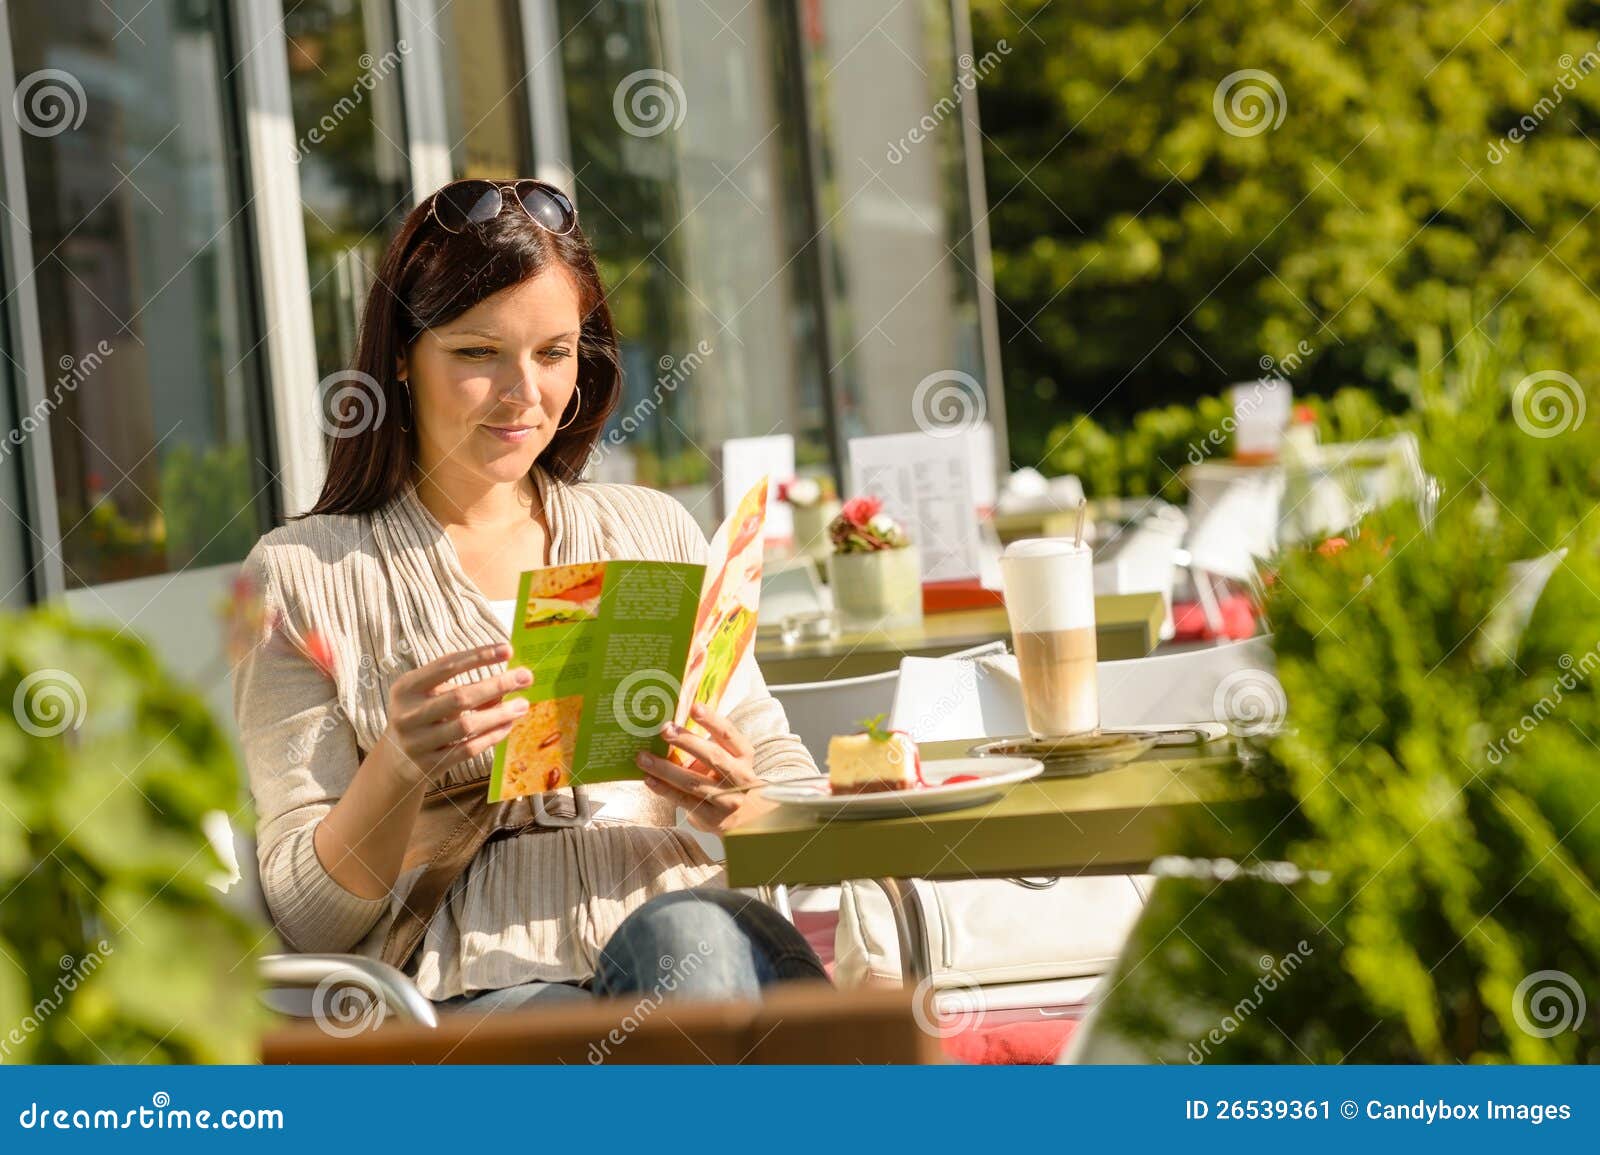 woman looking at menu cafe bar terrace